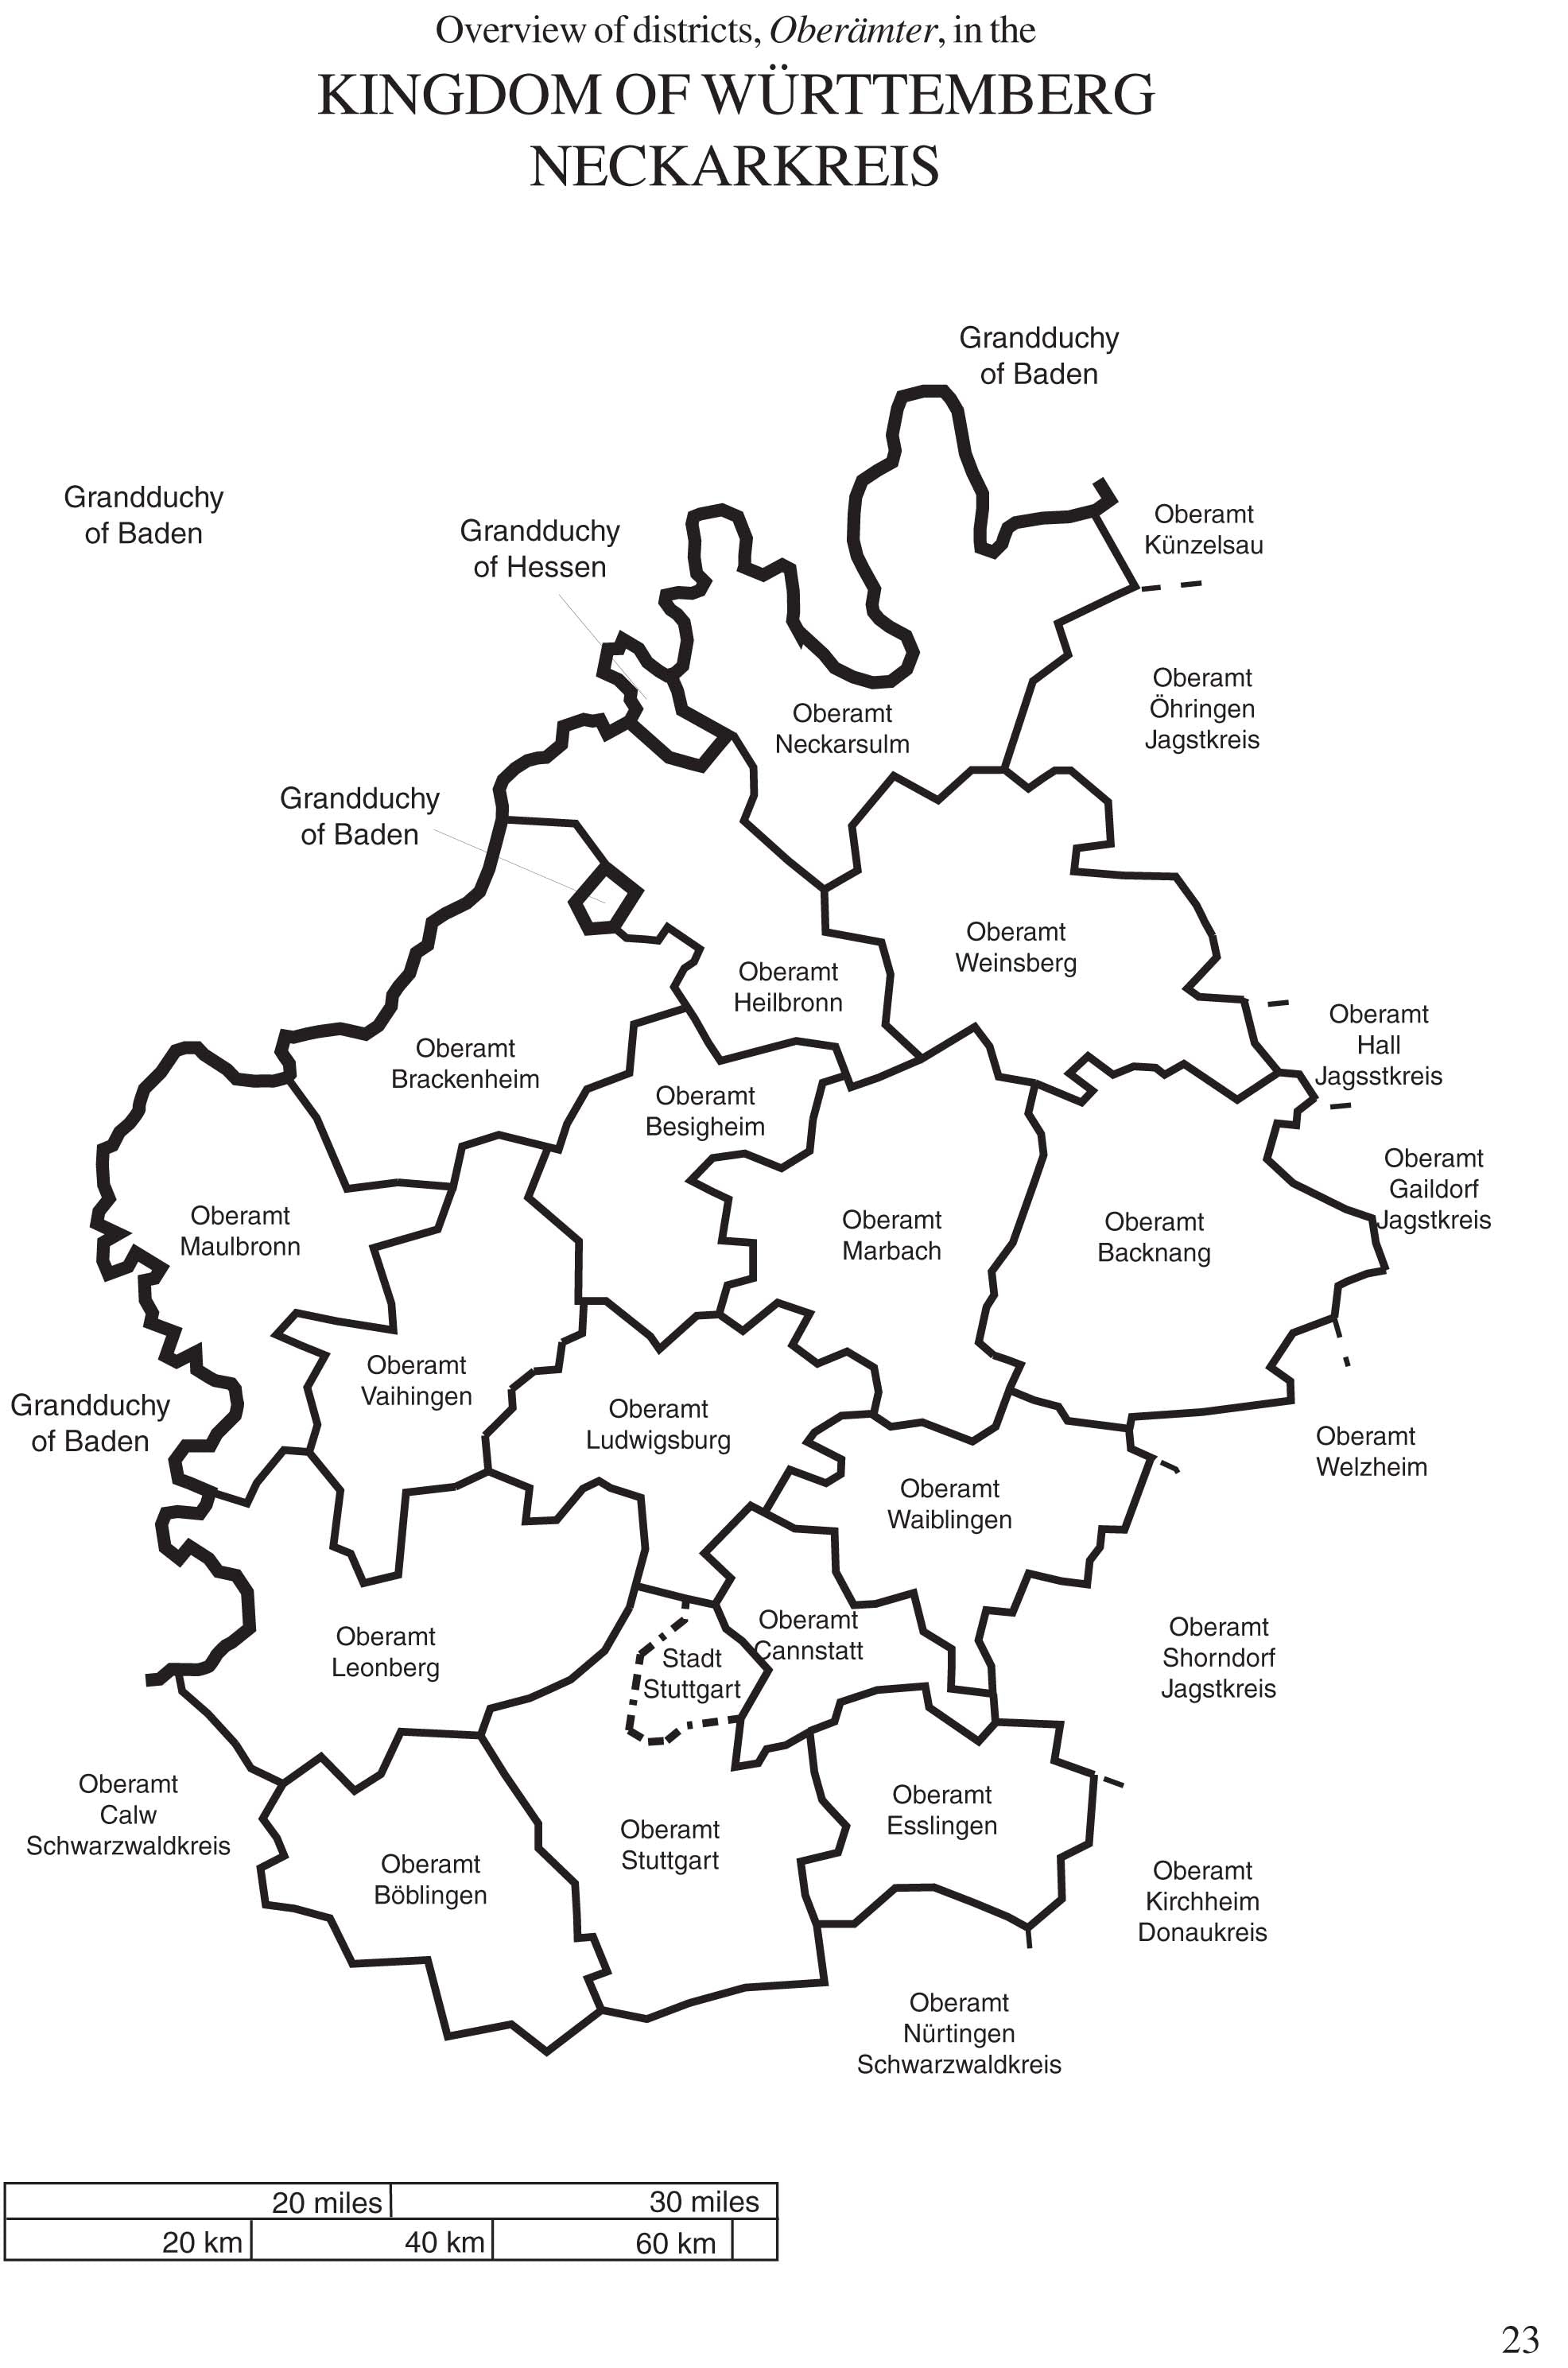 Map Guide to German Parish Registers - Vol 6 - Württemberg II -Neckarkreis & Hohenzollern Province - HARDBOUND